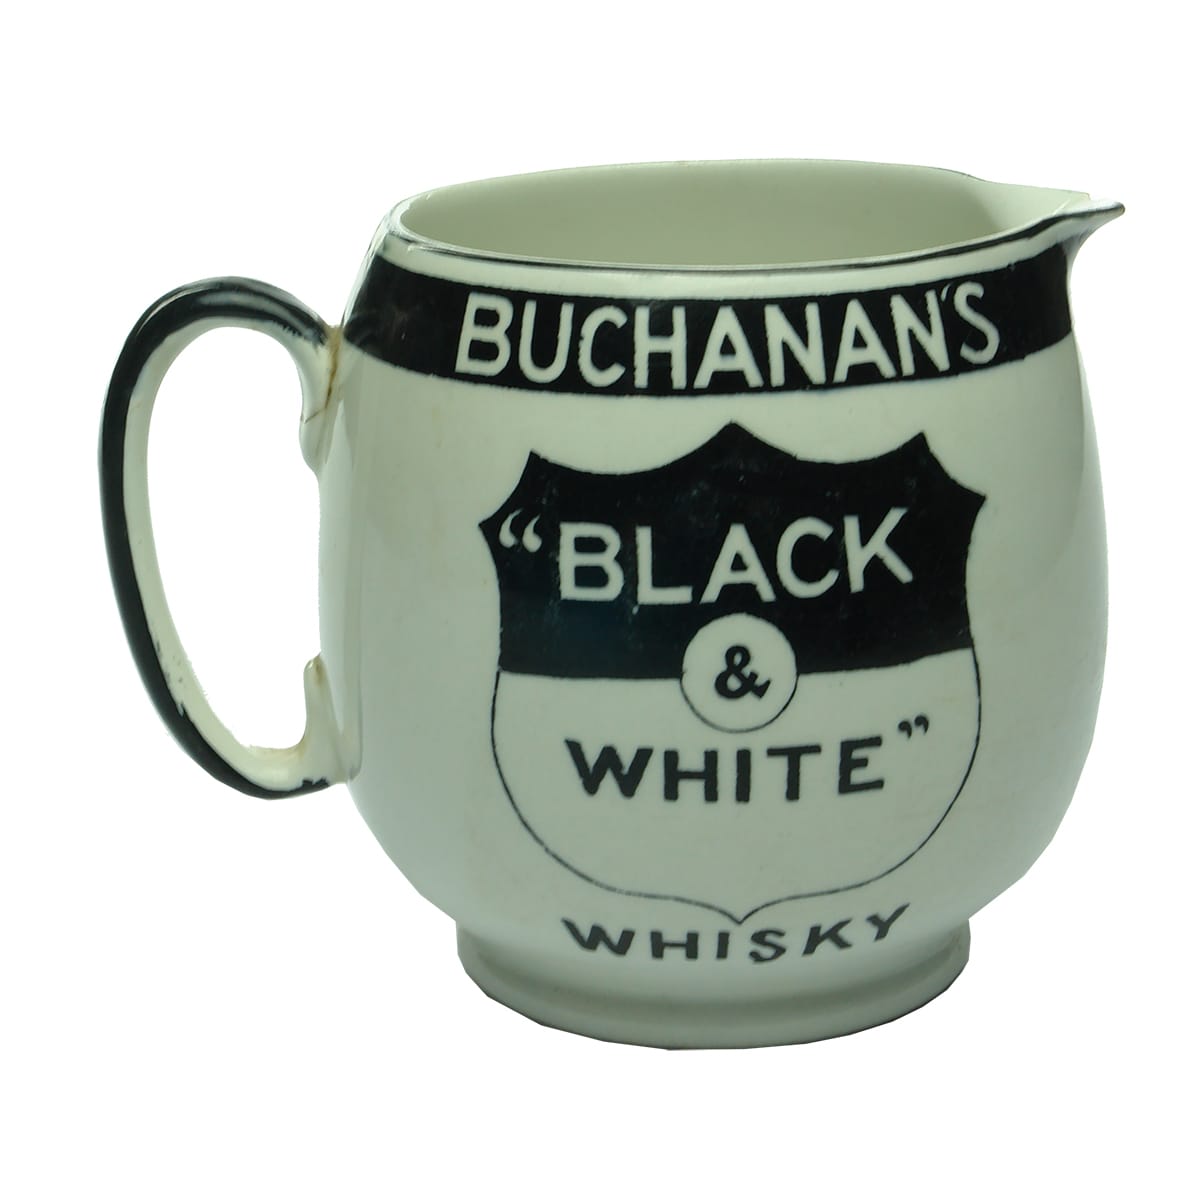 Whisky Water Jug. Buchanan's, Black & White Whisky.